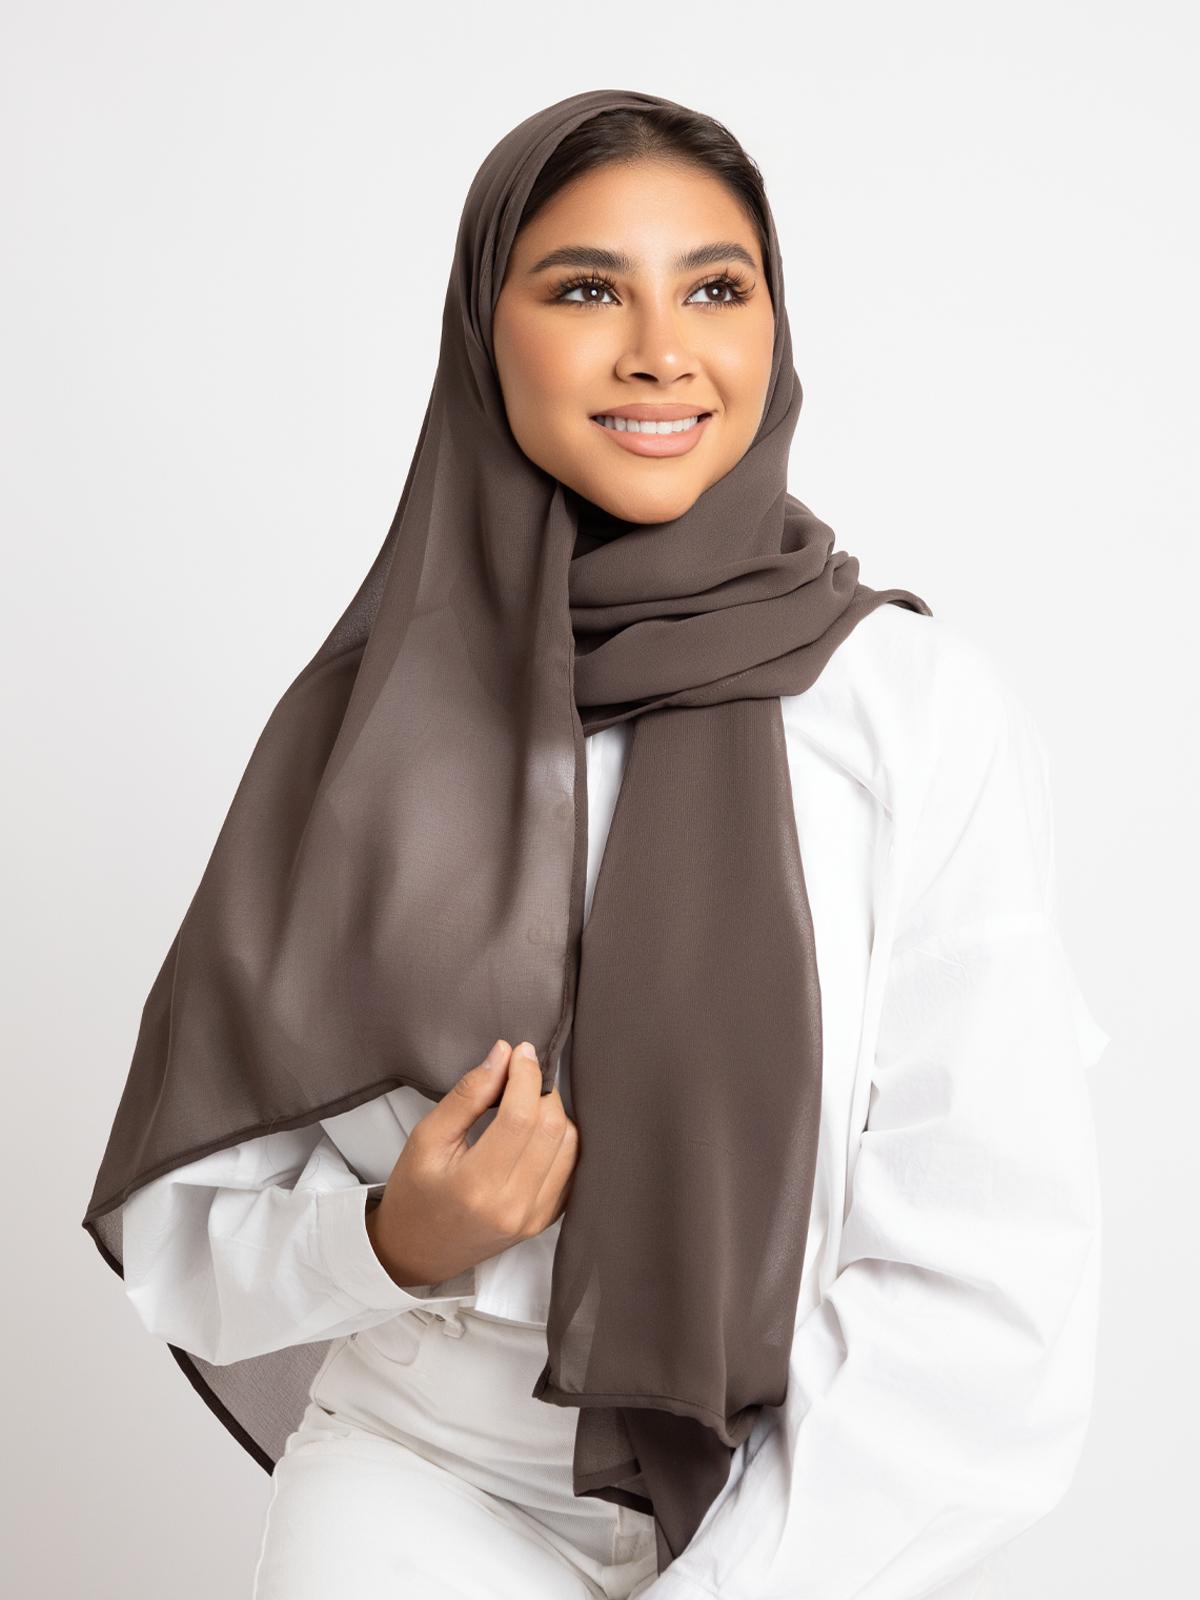 Luxurious chiffon hijab plain tarha 200 cm long brown color high quality material online in ksa by kaafmeem